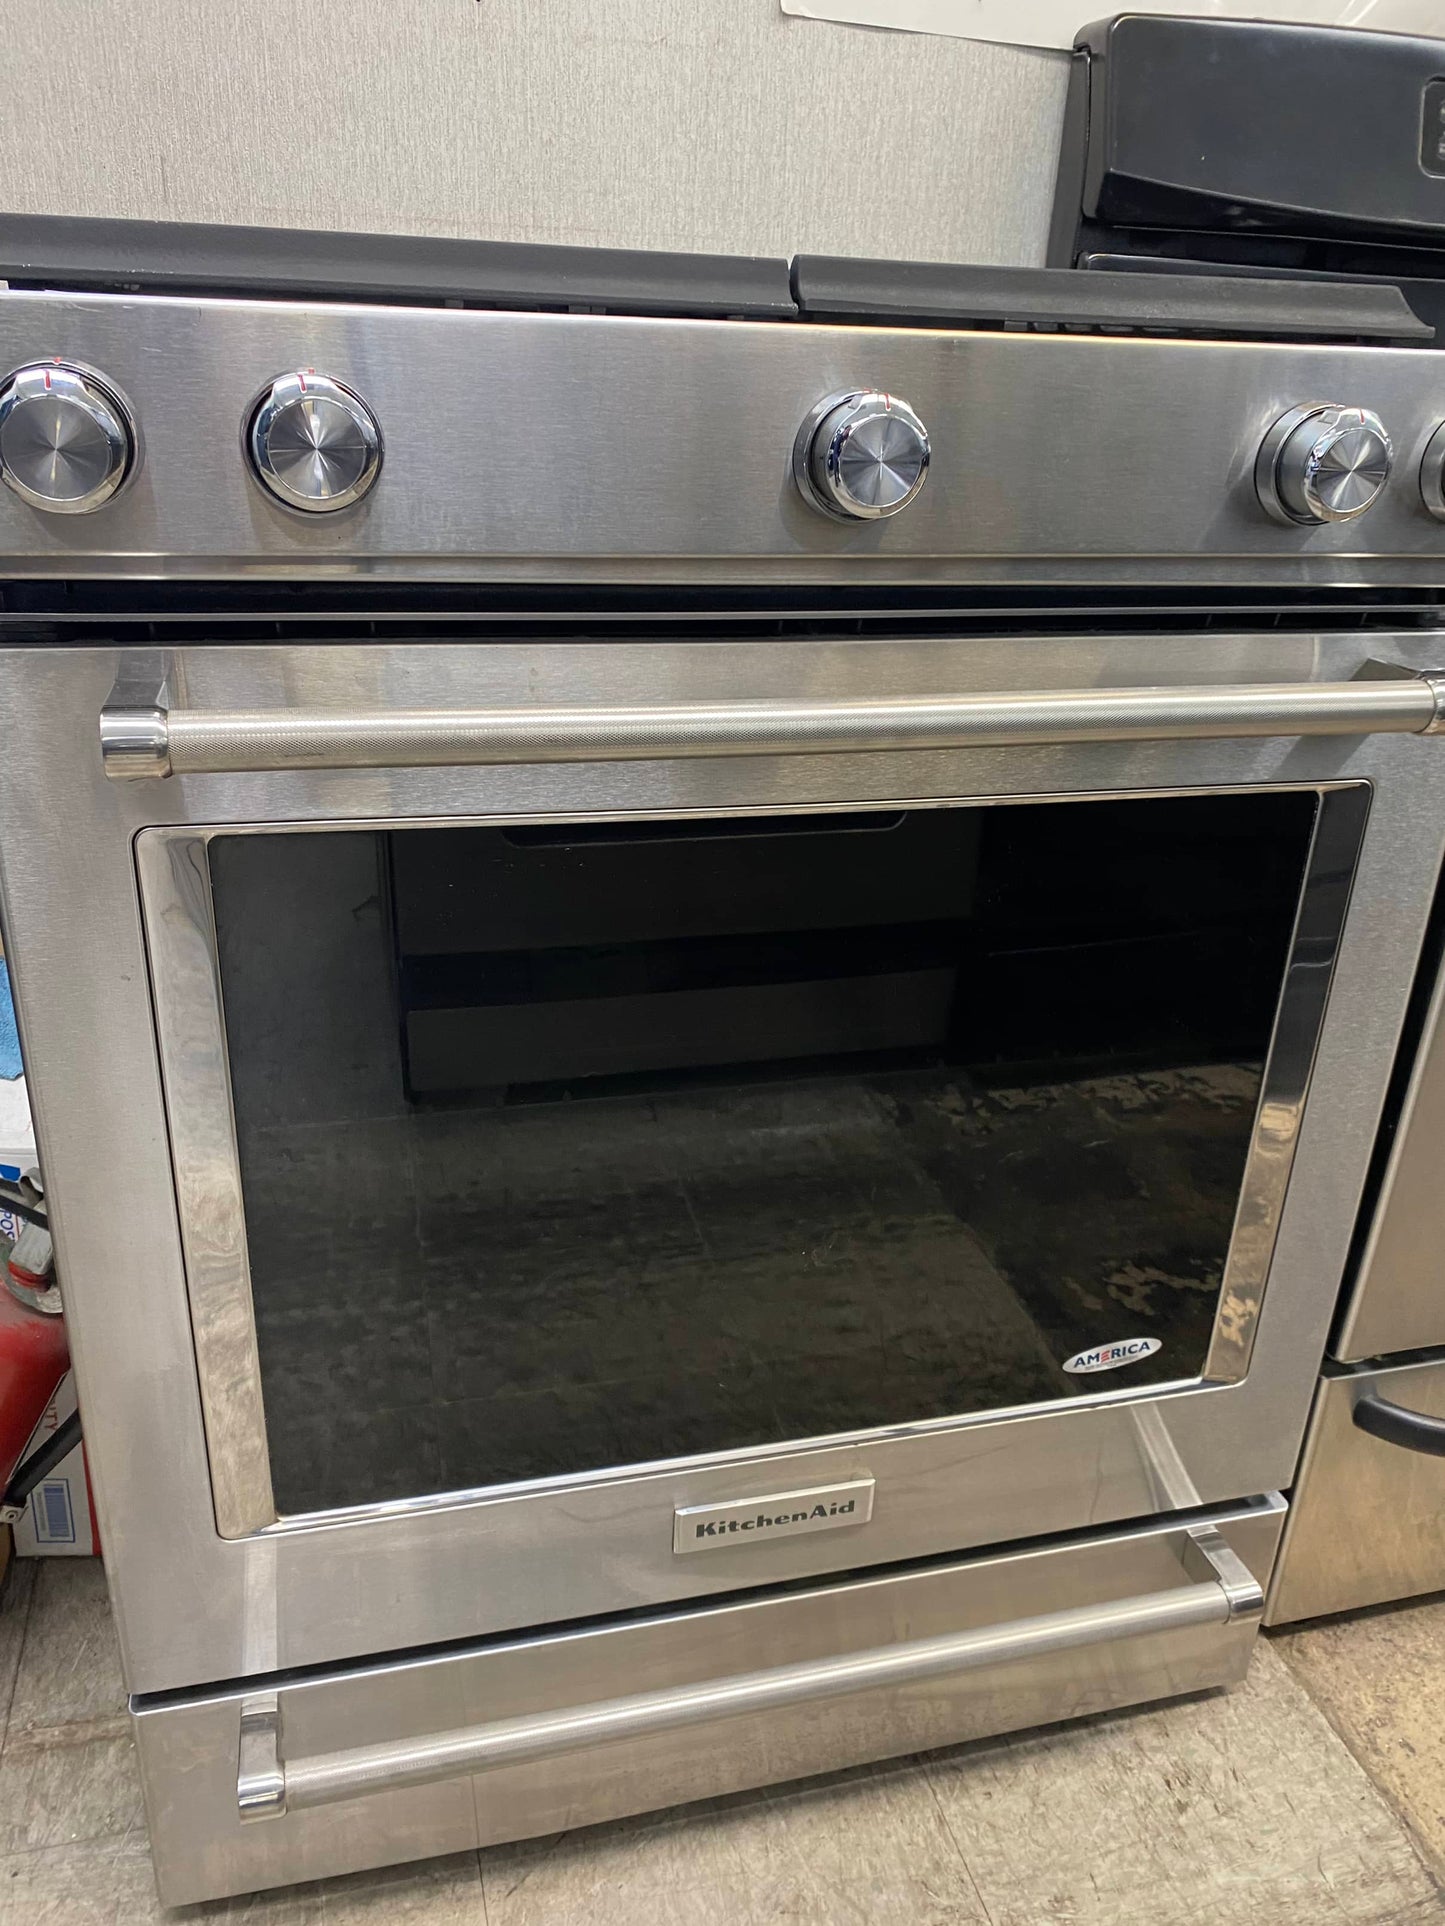 KitchenAid gas range stainless steel slide in 5 burner 30”